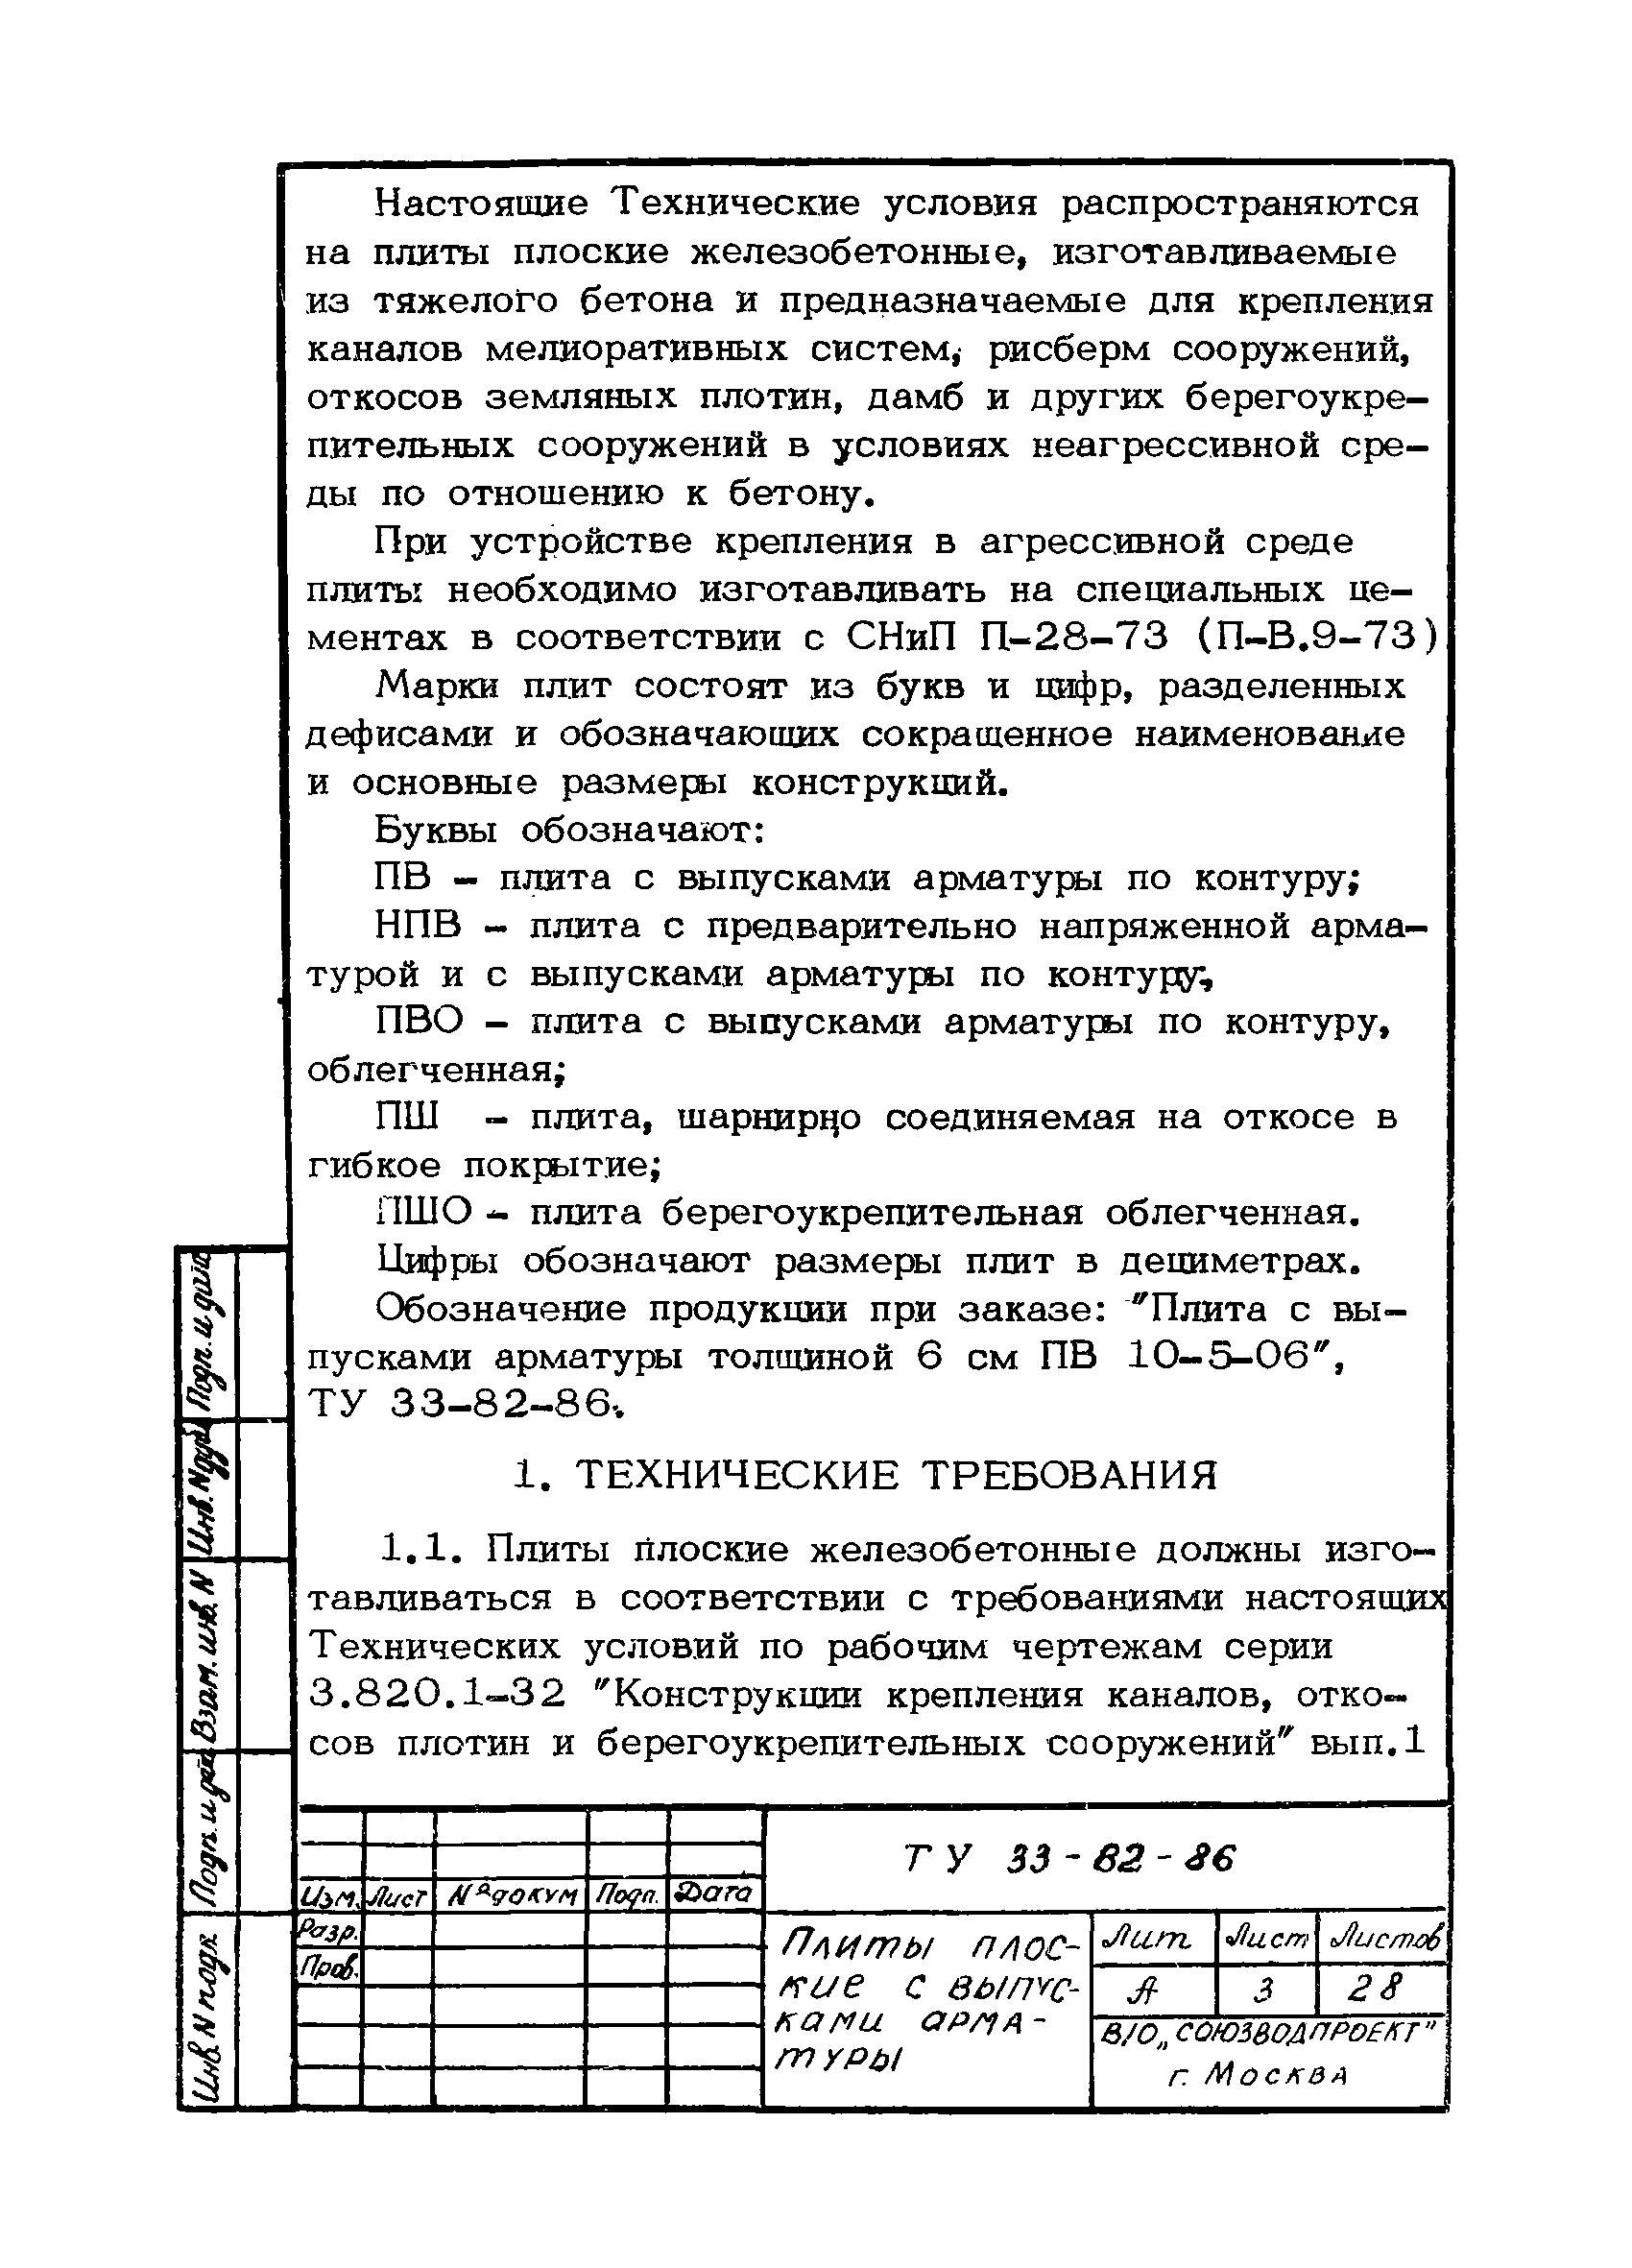 ТУ 33-82-86